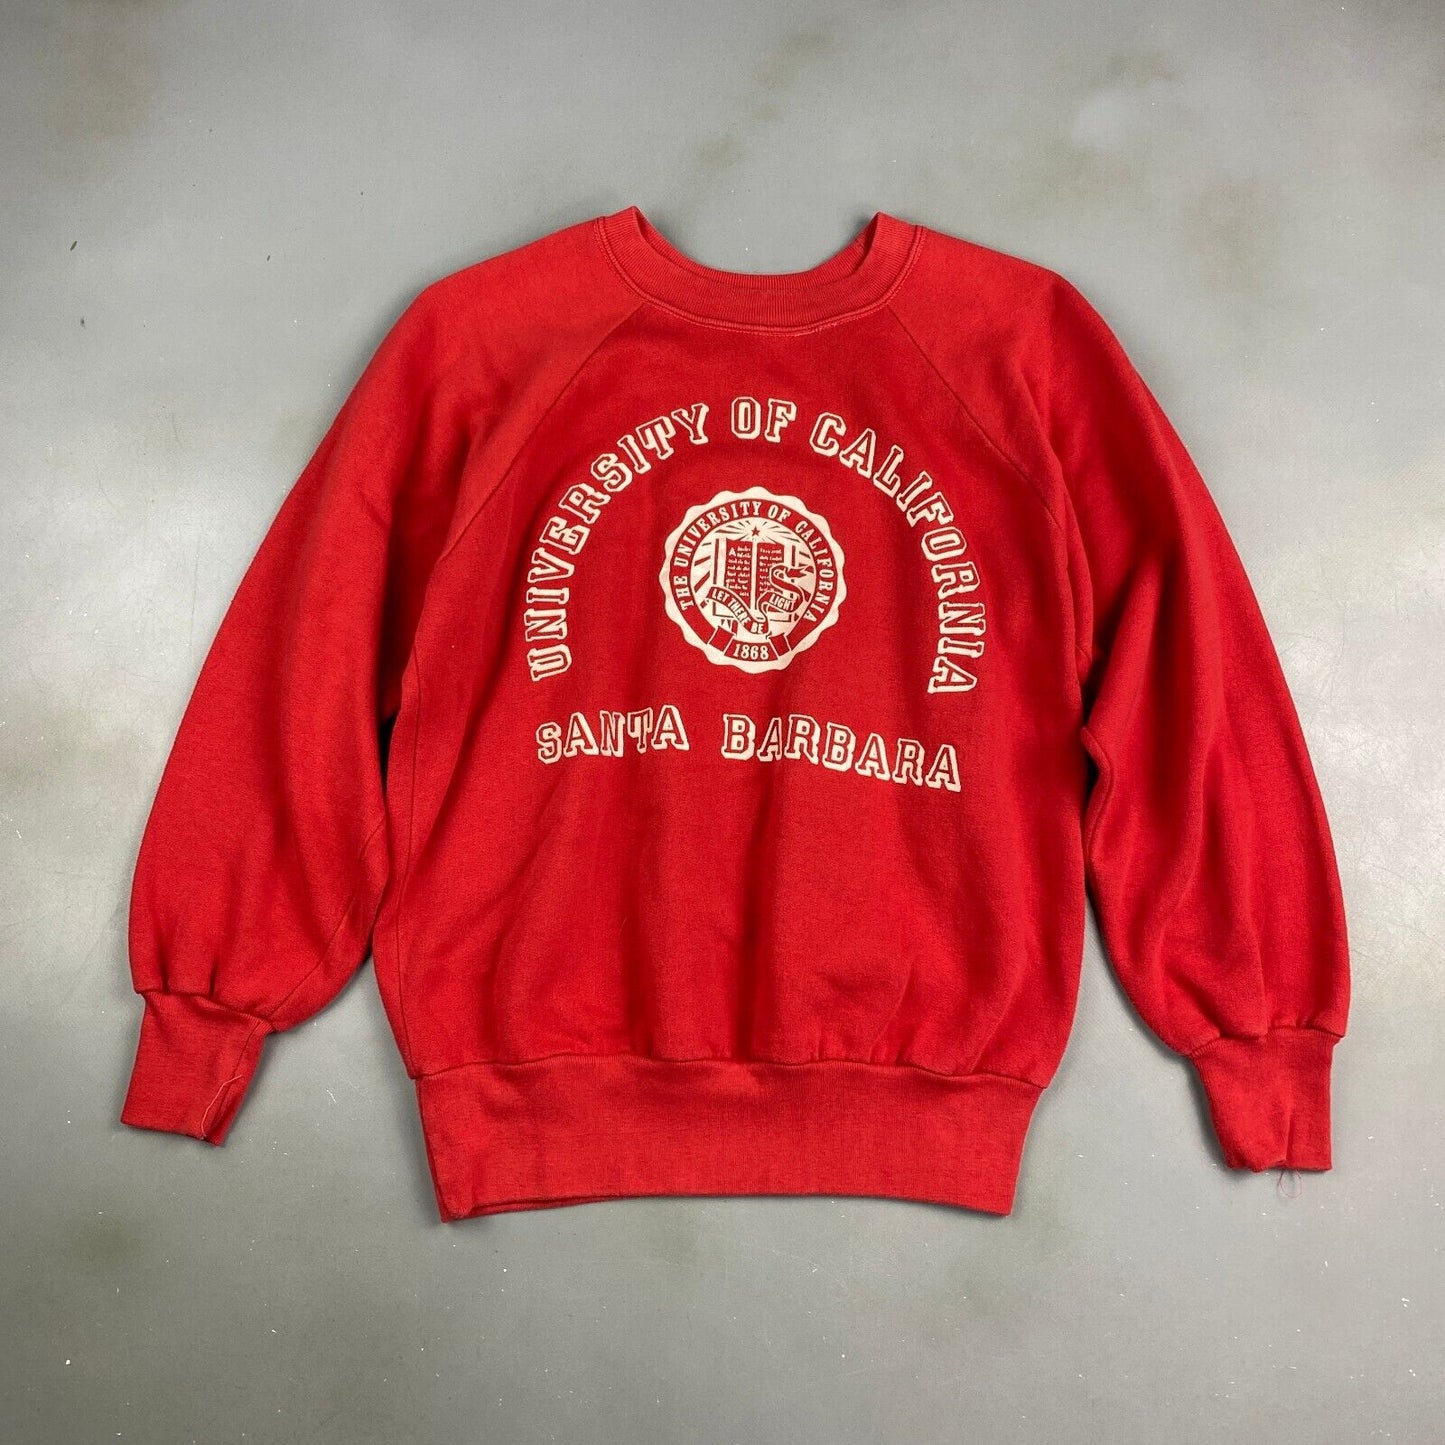 VINTAGE 80s University Of California Santa Barbara Sweater sz Small Adult